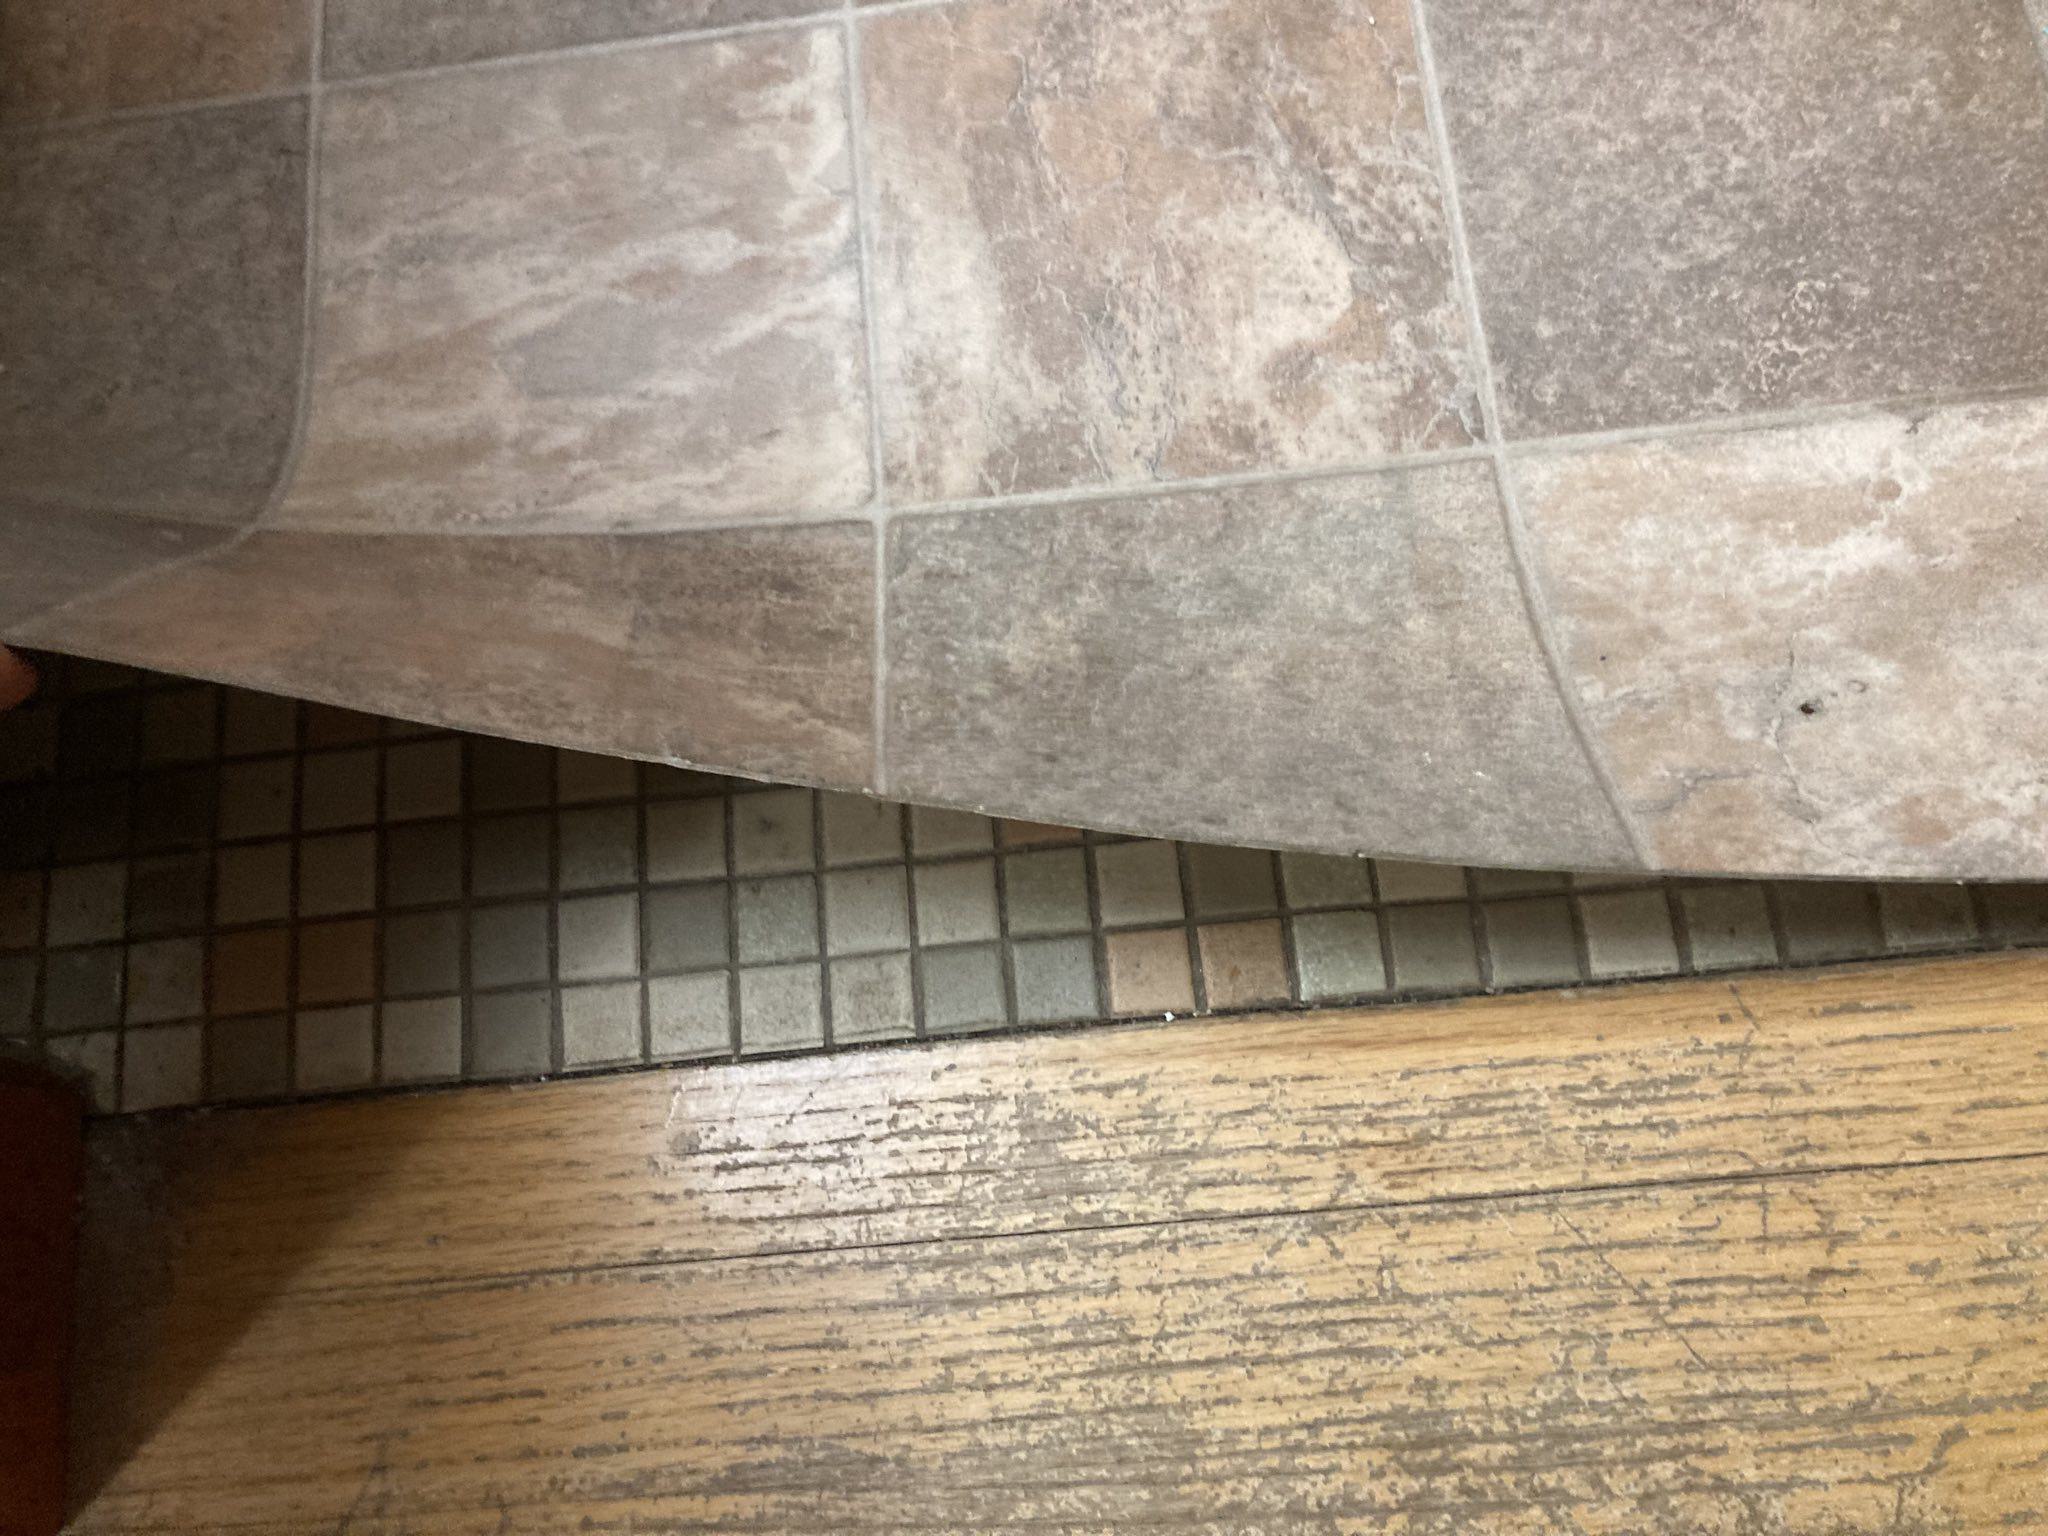 Bathroom floor was built incorrectly